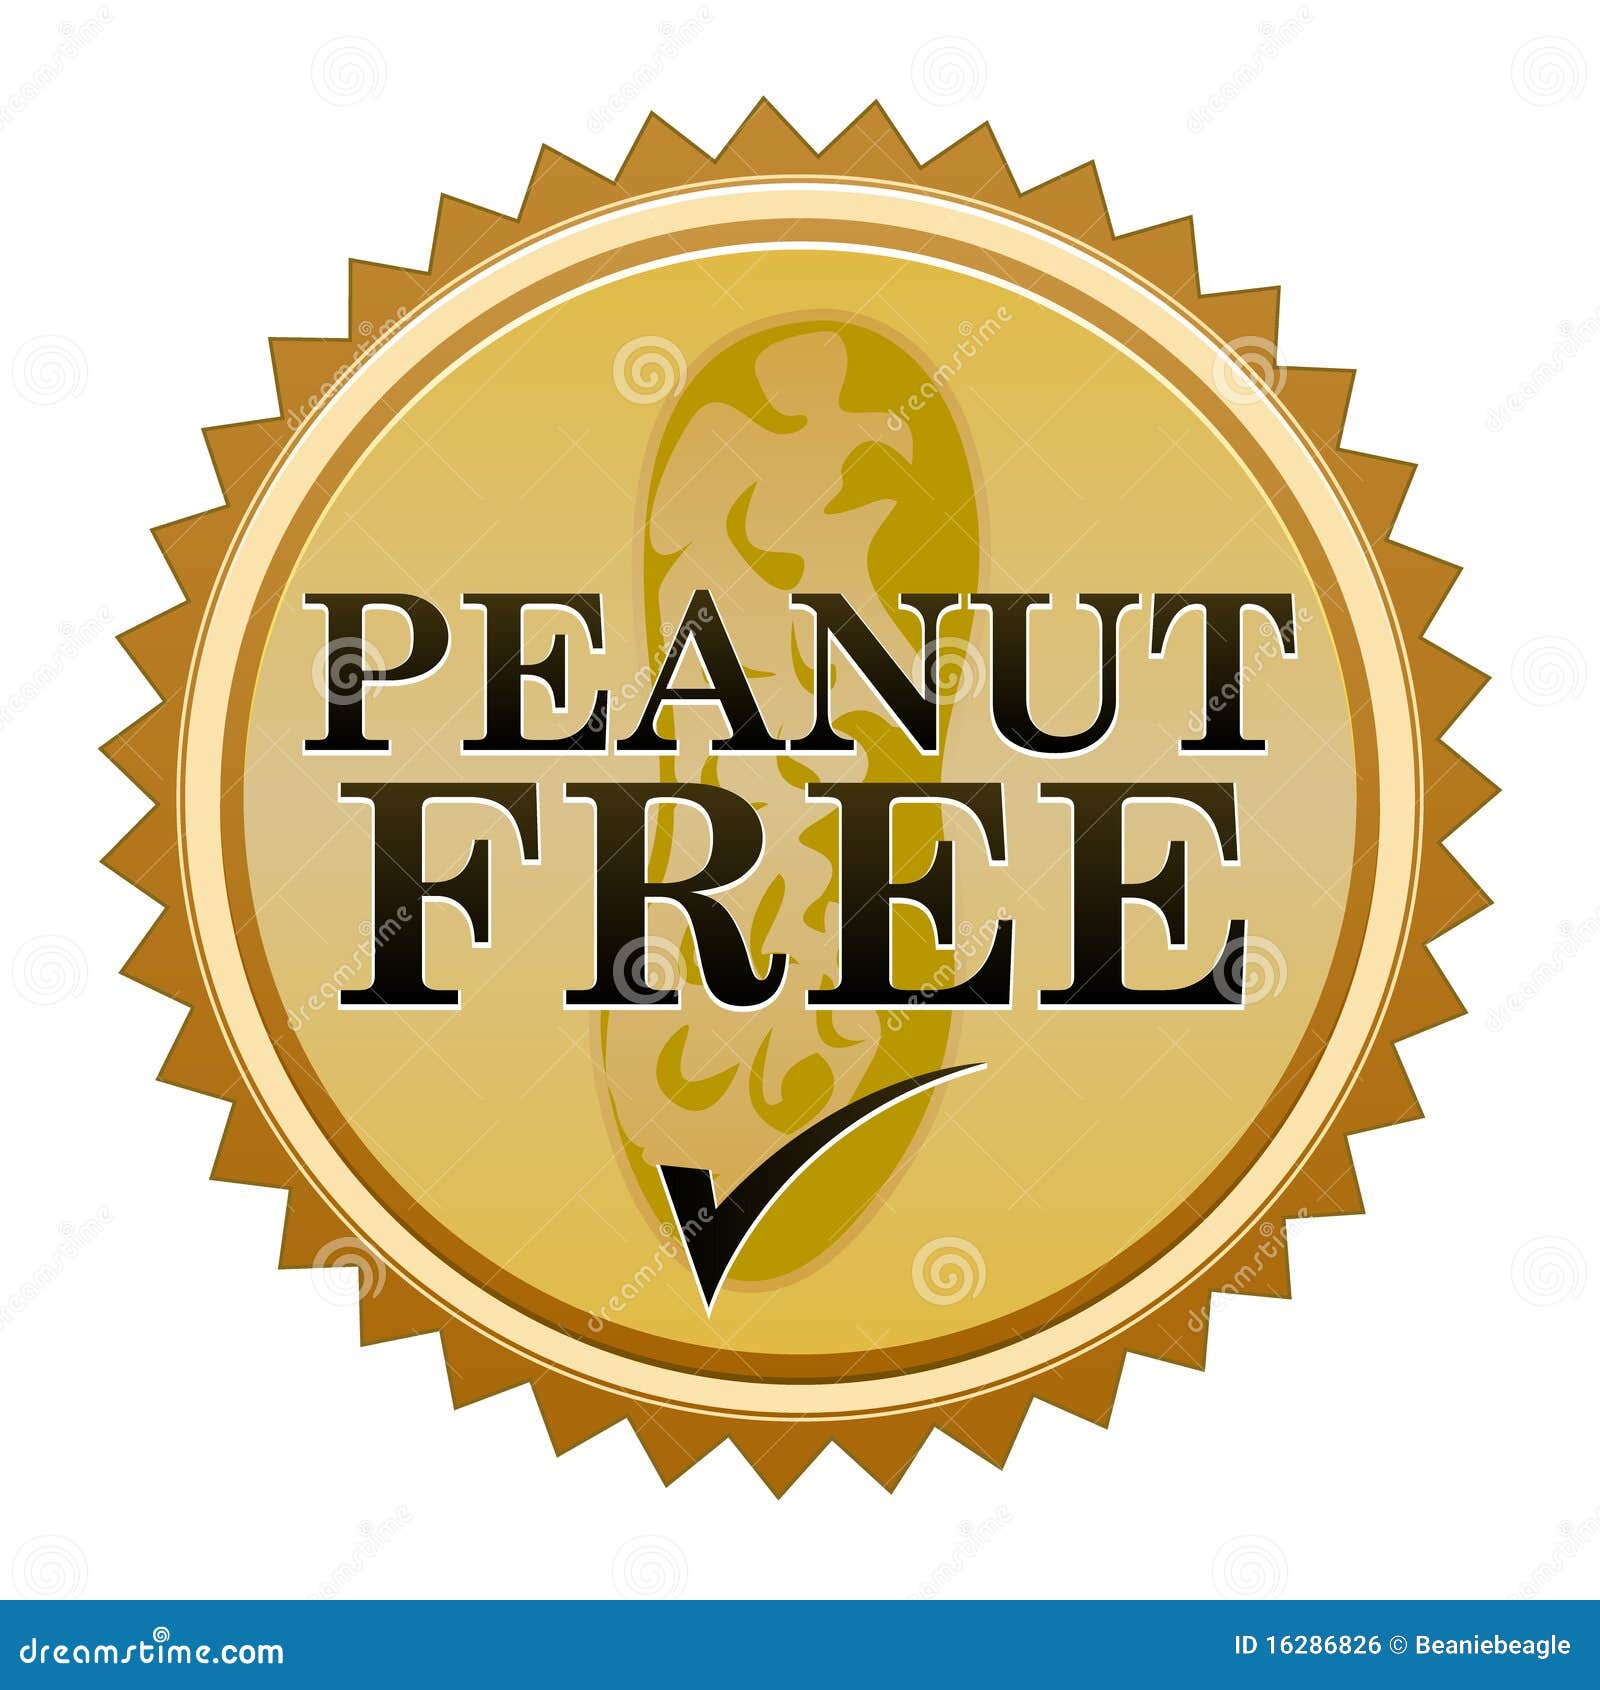 Peanut Free Seal stock vector. Illustration of circle - 162868261300 x 1390